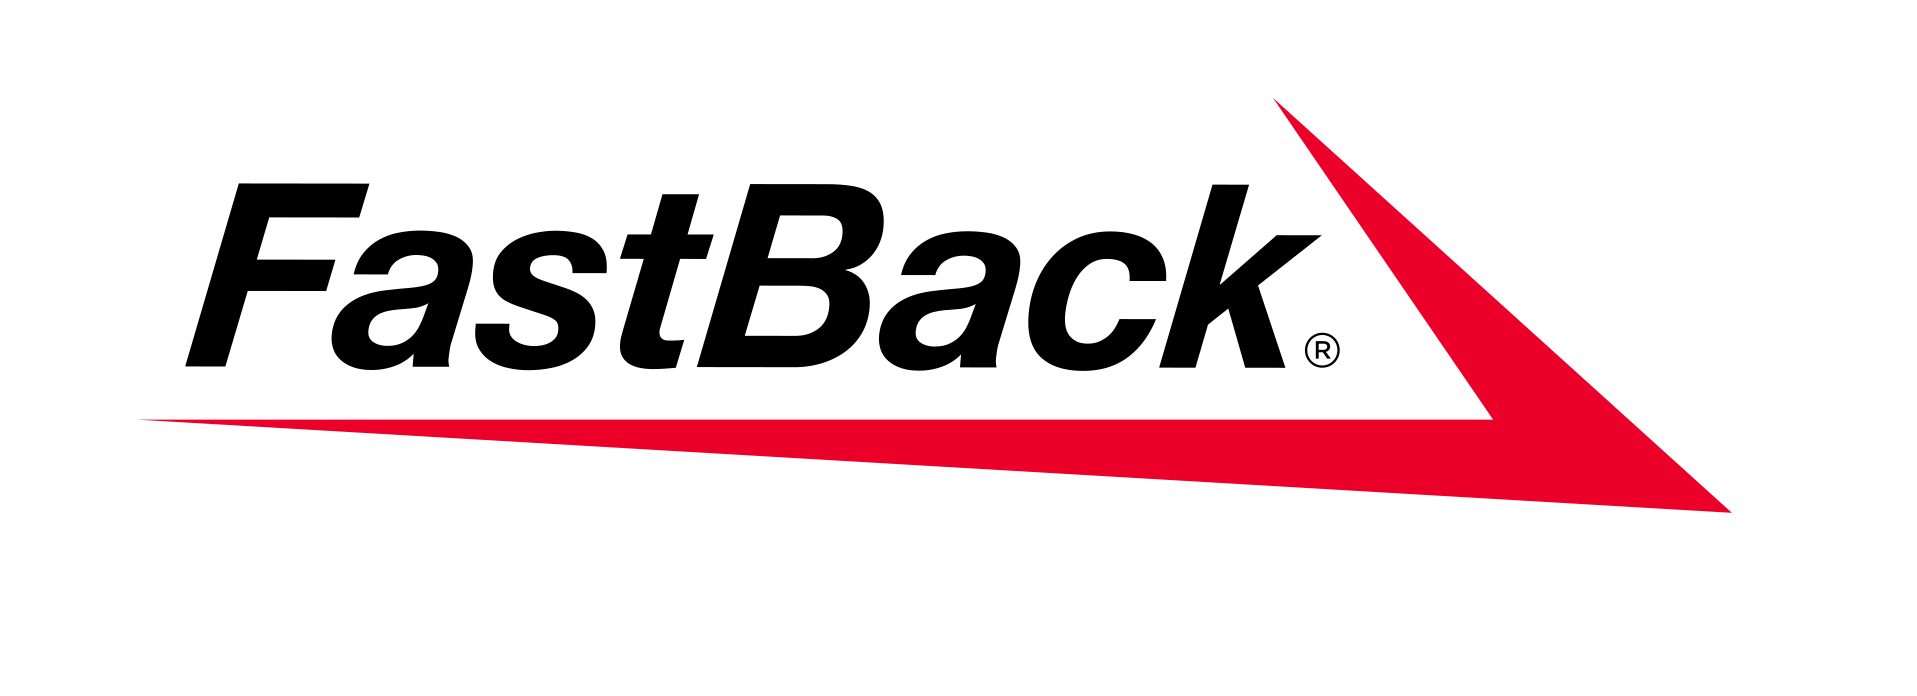 FastBack Horizontal Motion Conveyors Logo